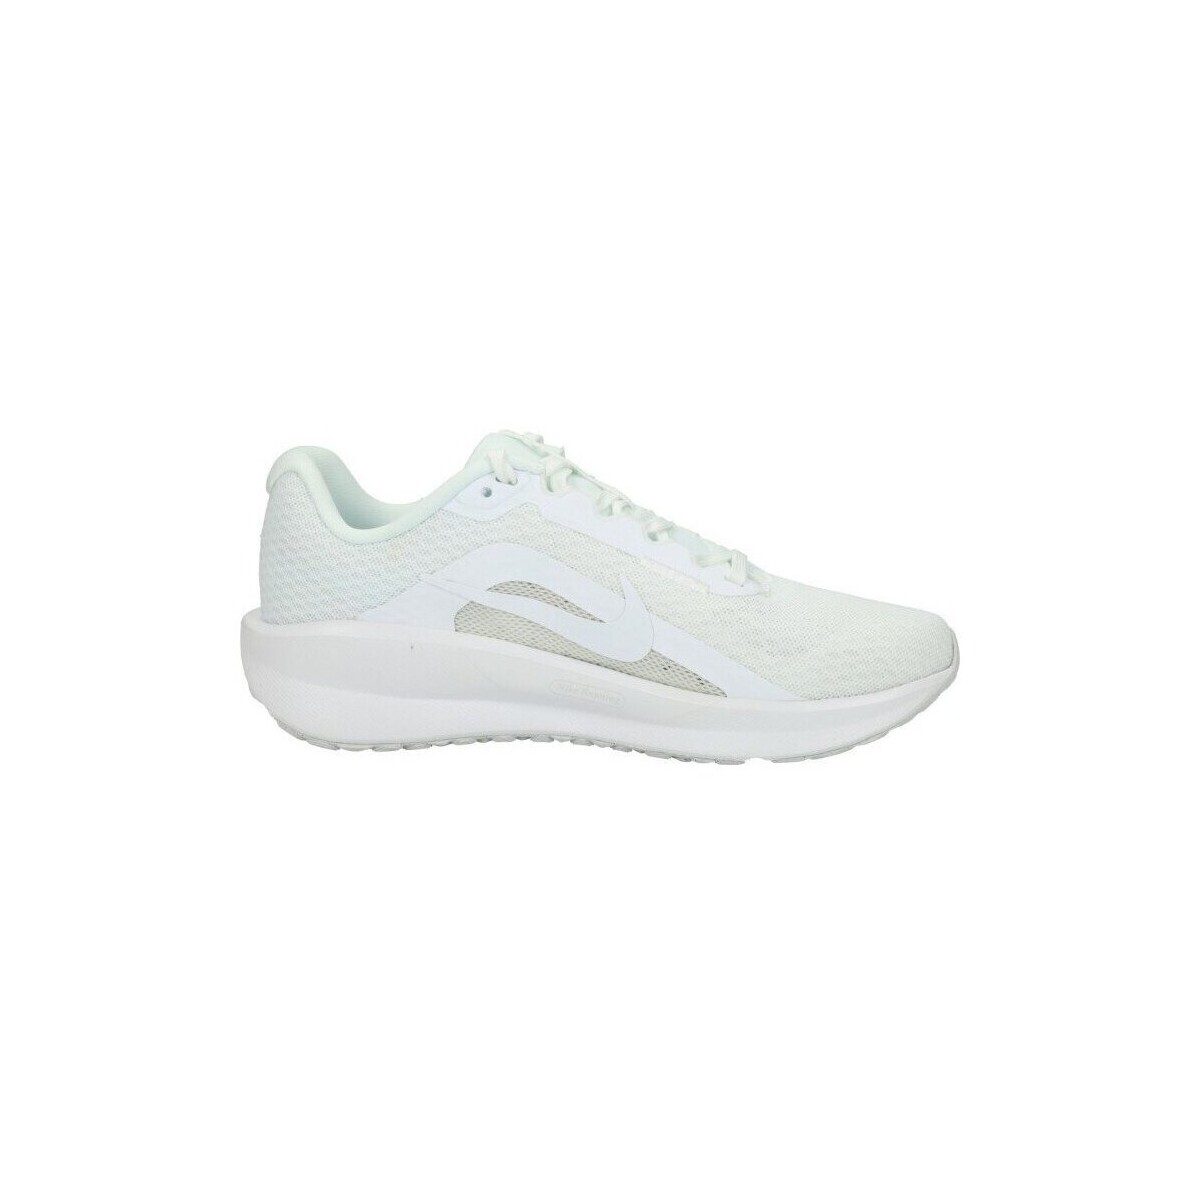 Sko Dame Lave sneakers Nike  Hvid